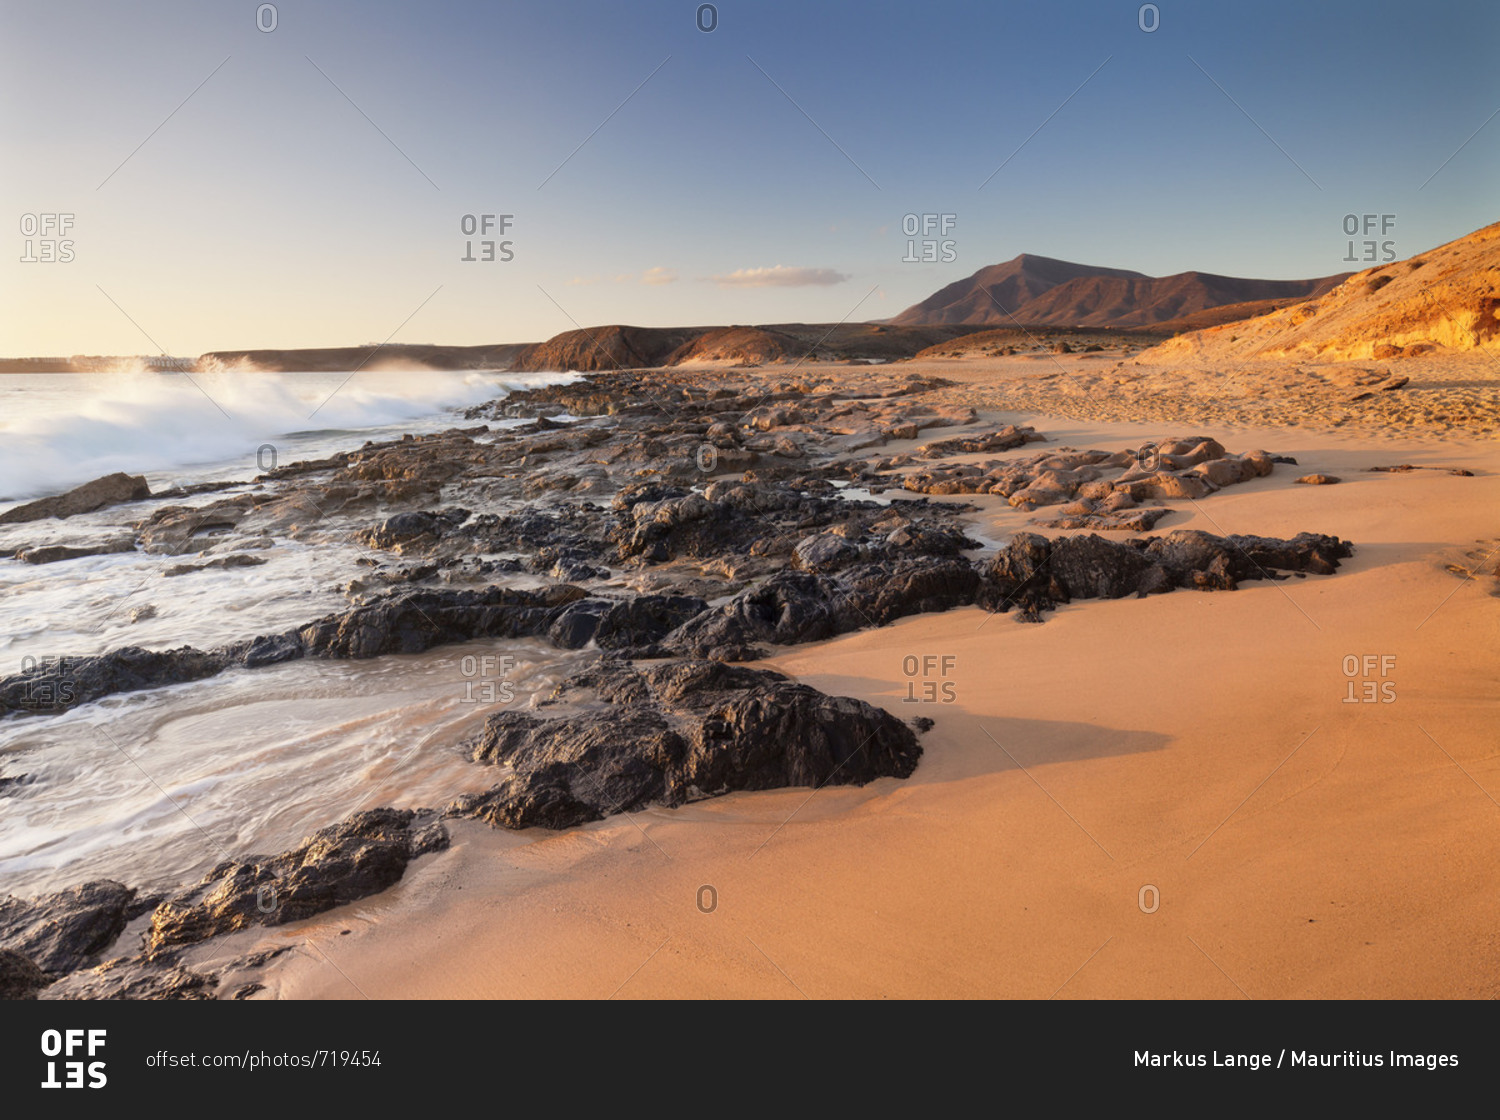 Playa Mujeres at sundown, Papagayo beaches, near Playa Blanca, Lanzarote, Canary islands, Spain